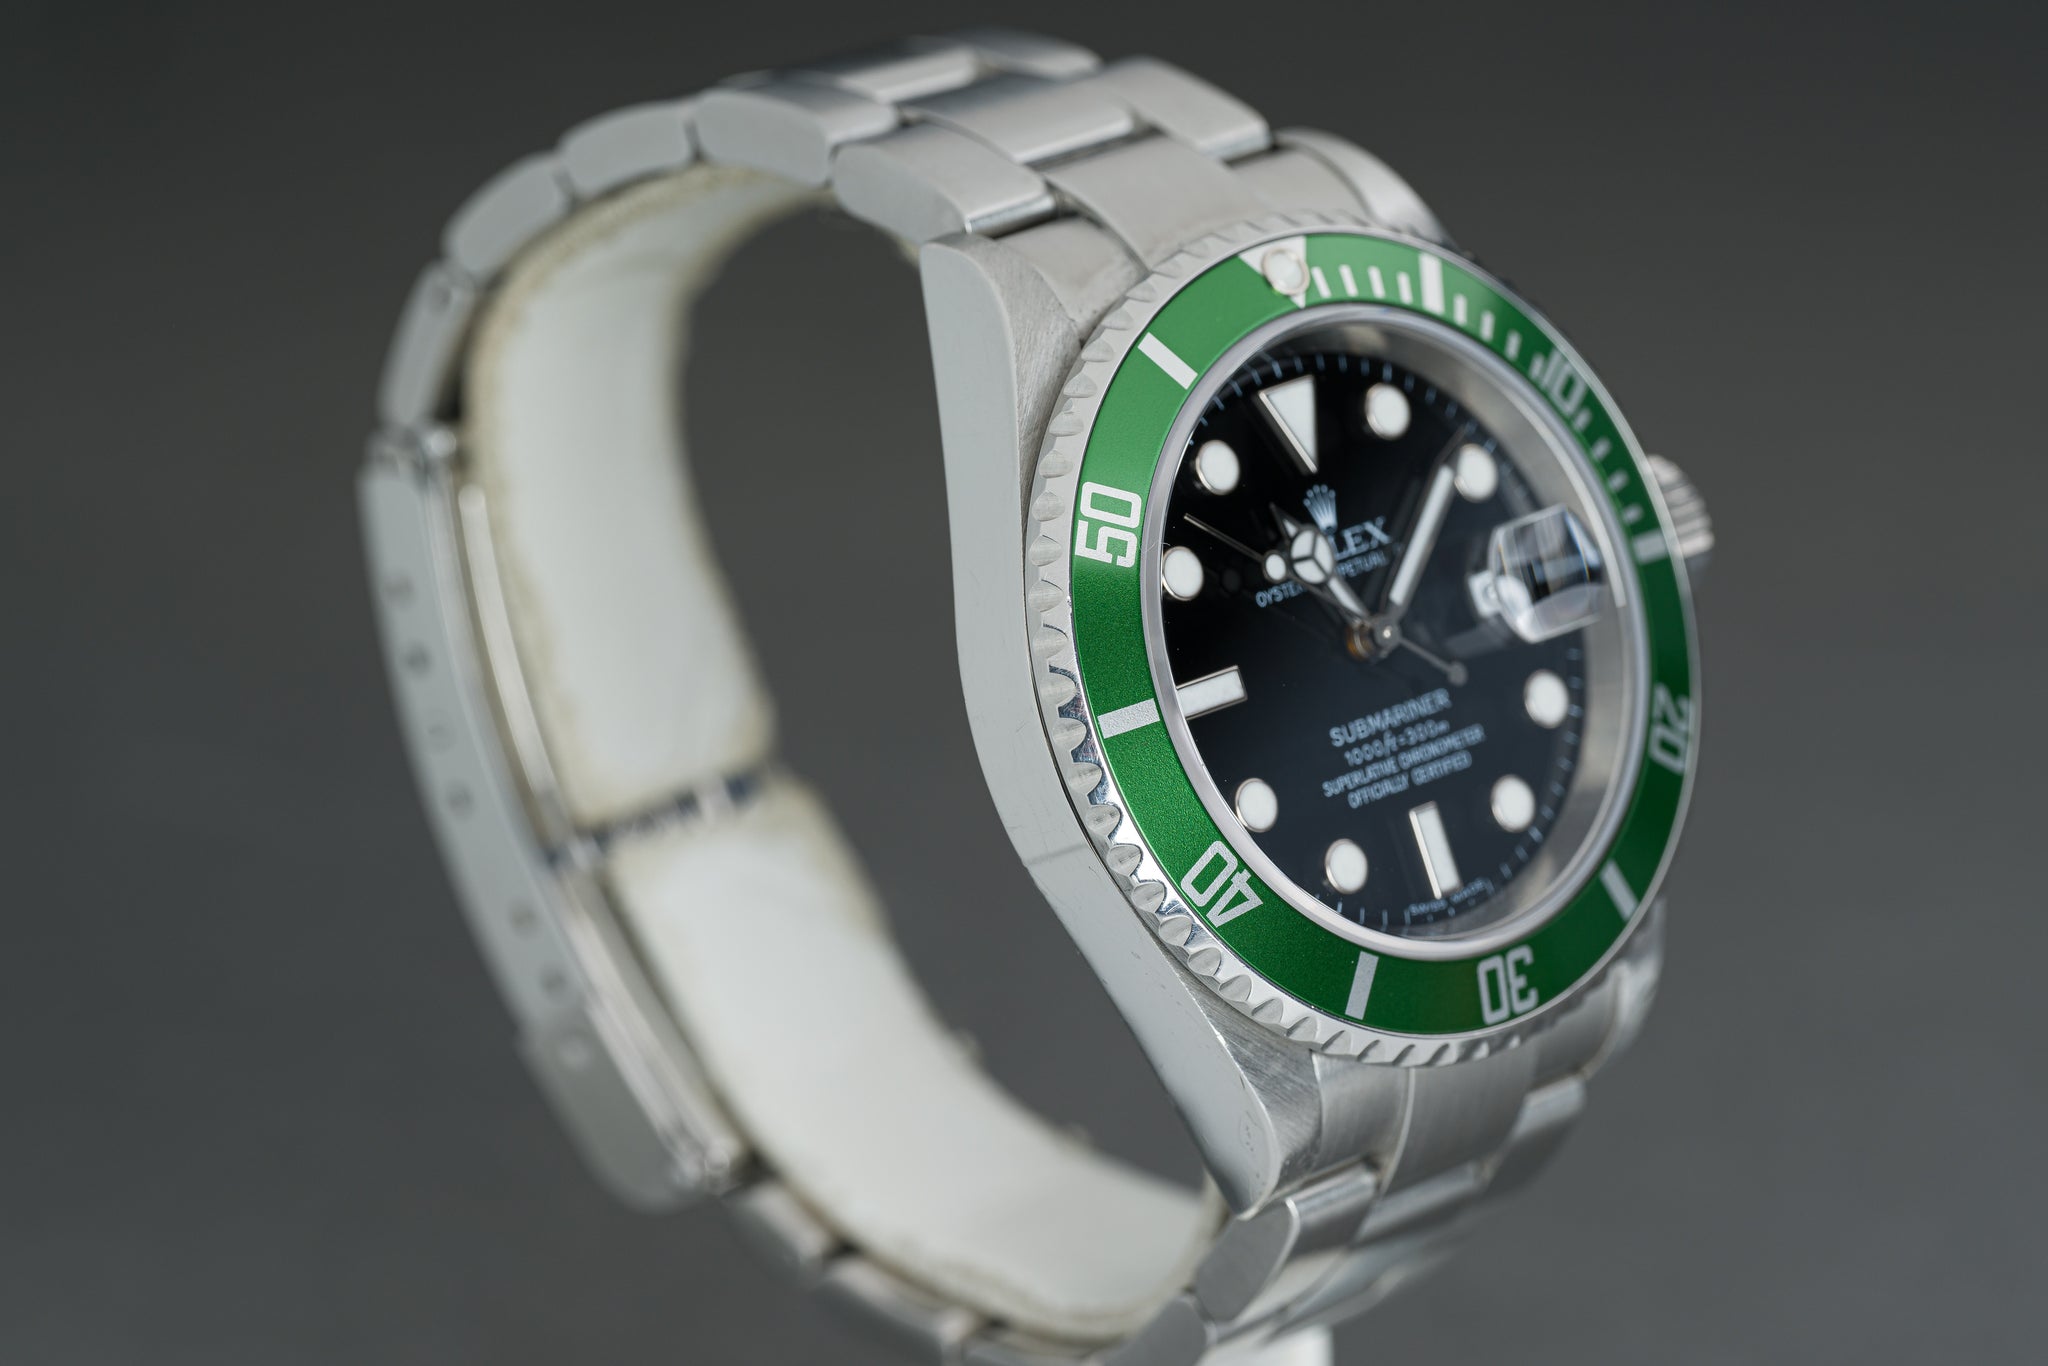 Rolex Submariner Date Green Bezel 50th Anniversary 16610LV